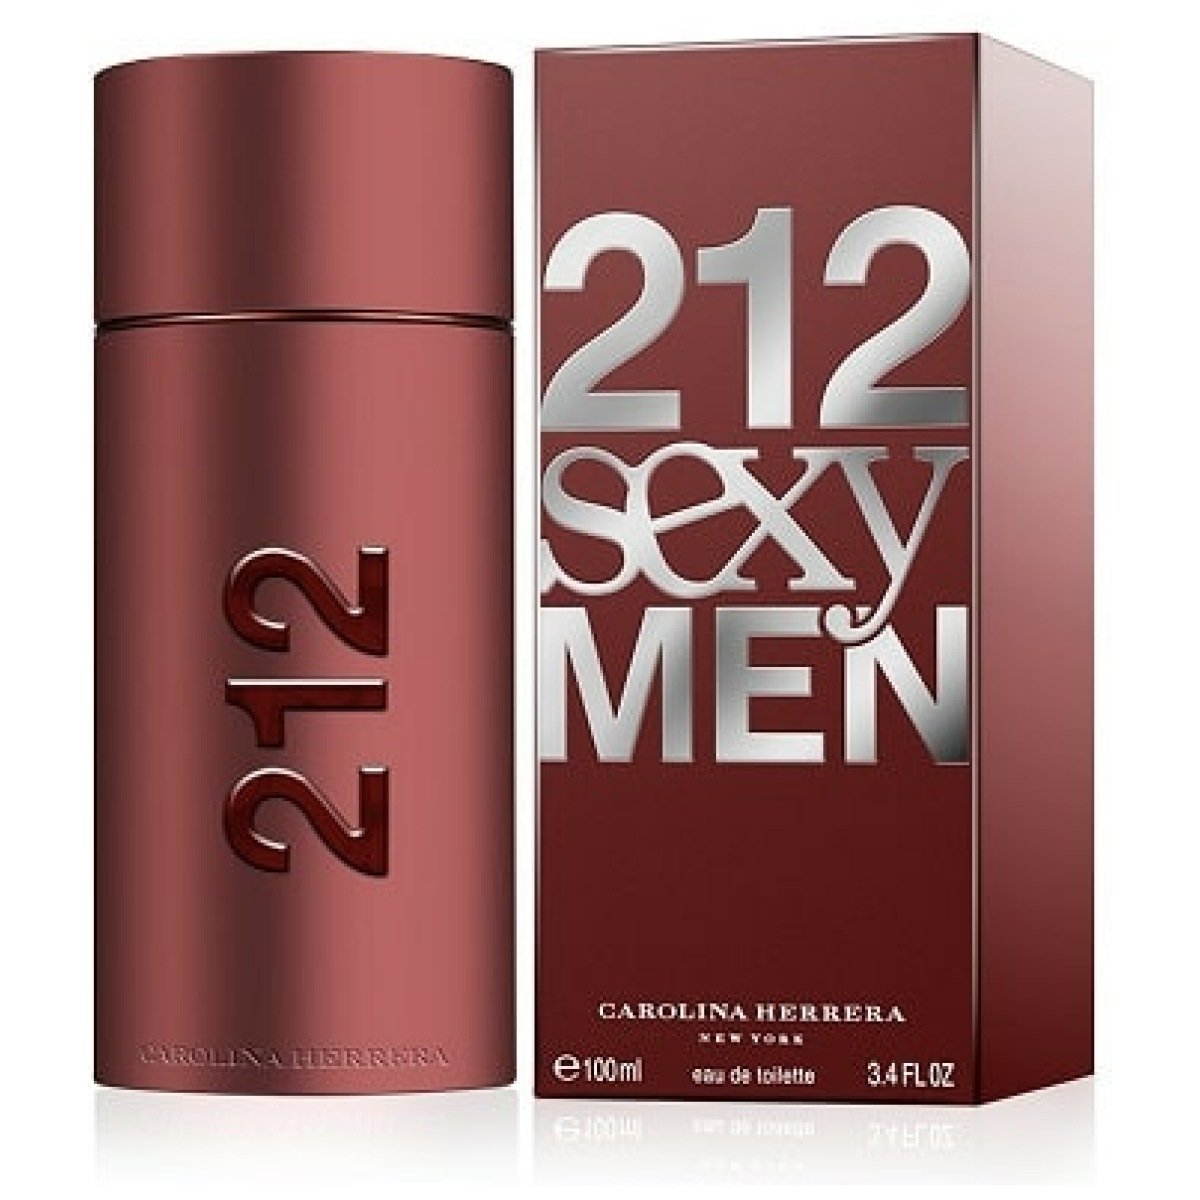 Carolina Herrera 212 Sexy EDT Perfume For Men 100ml